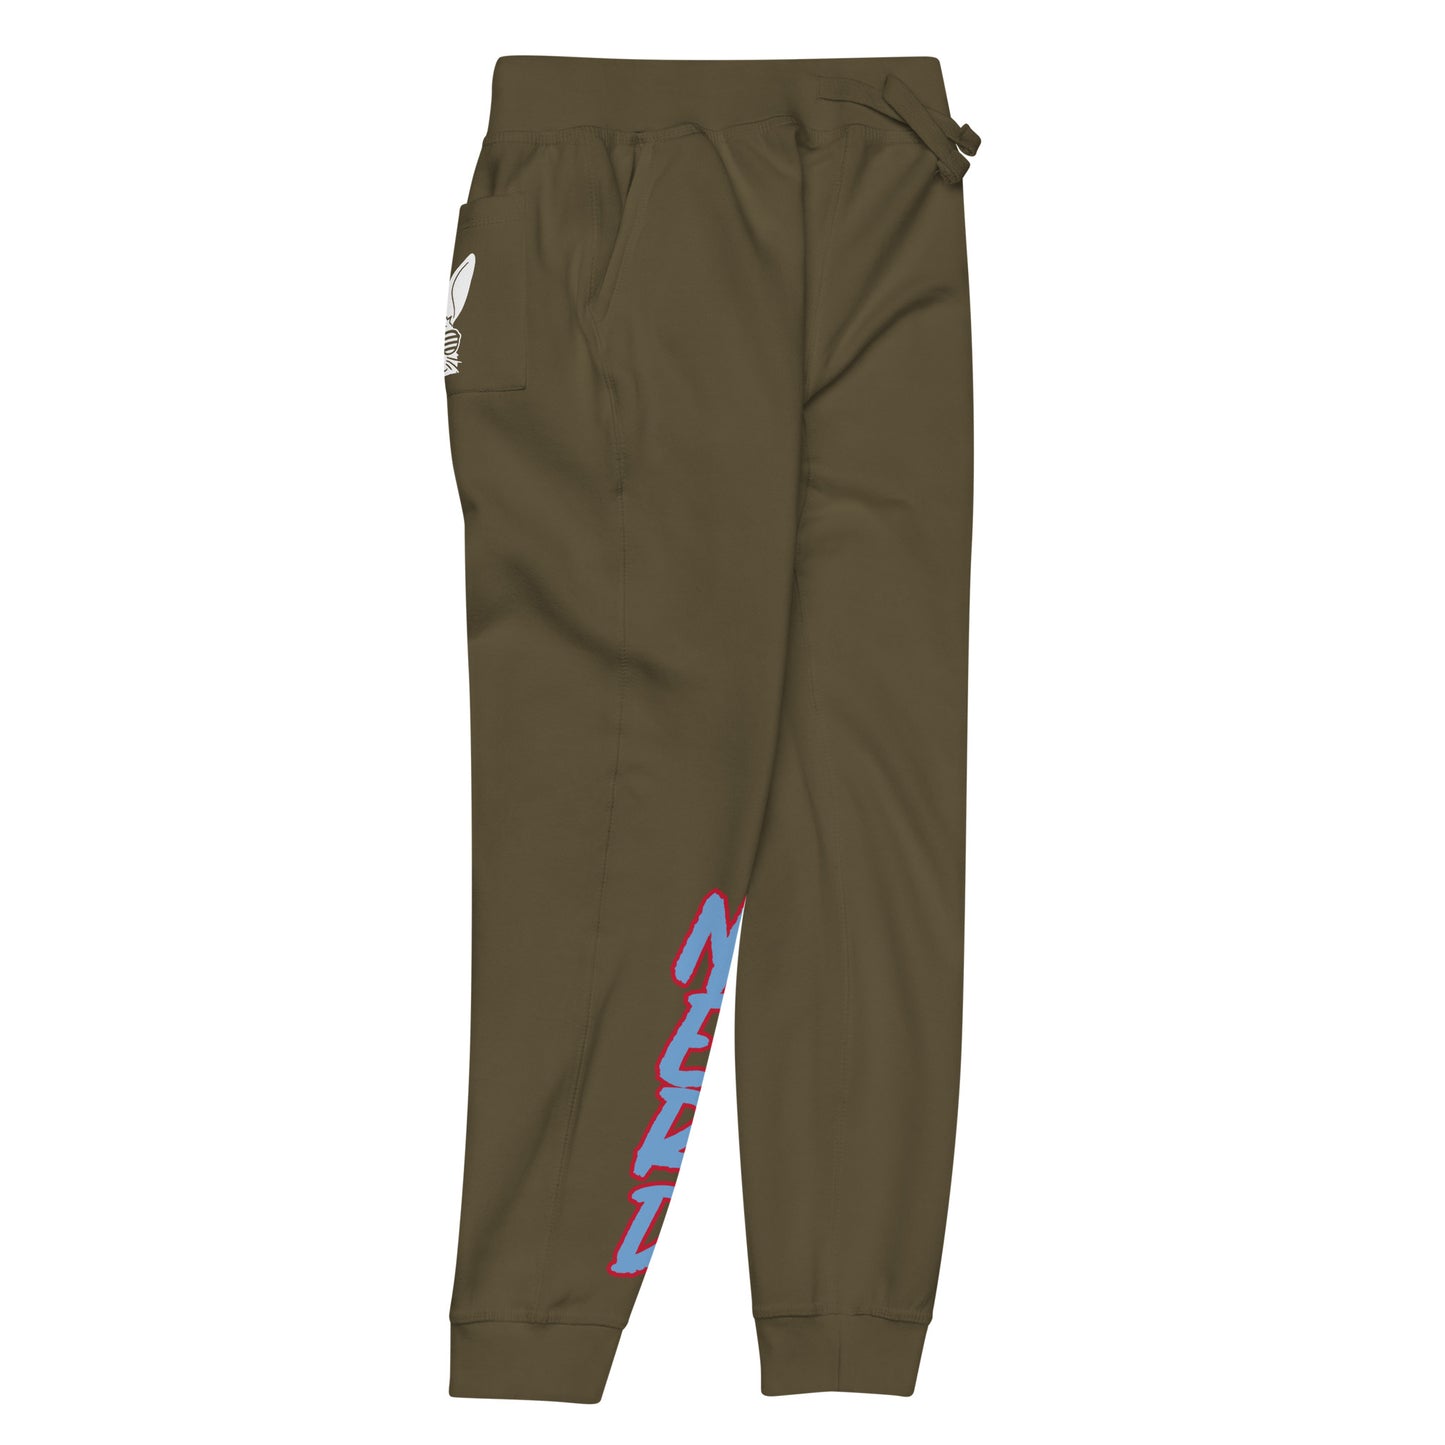 Unisex fleece sweatpants (Nerd Style)